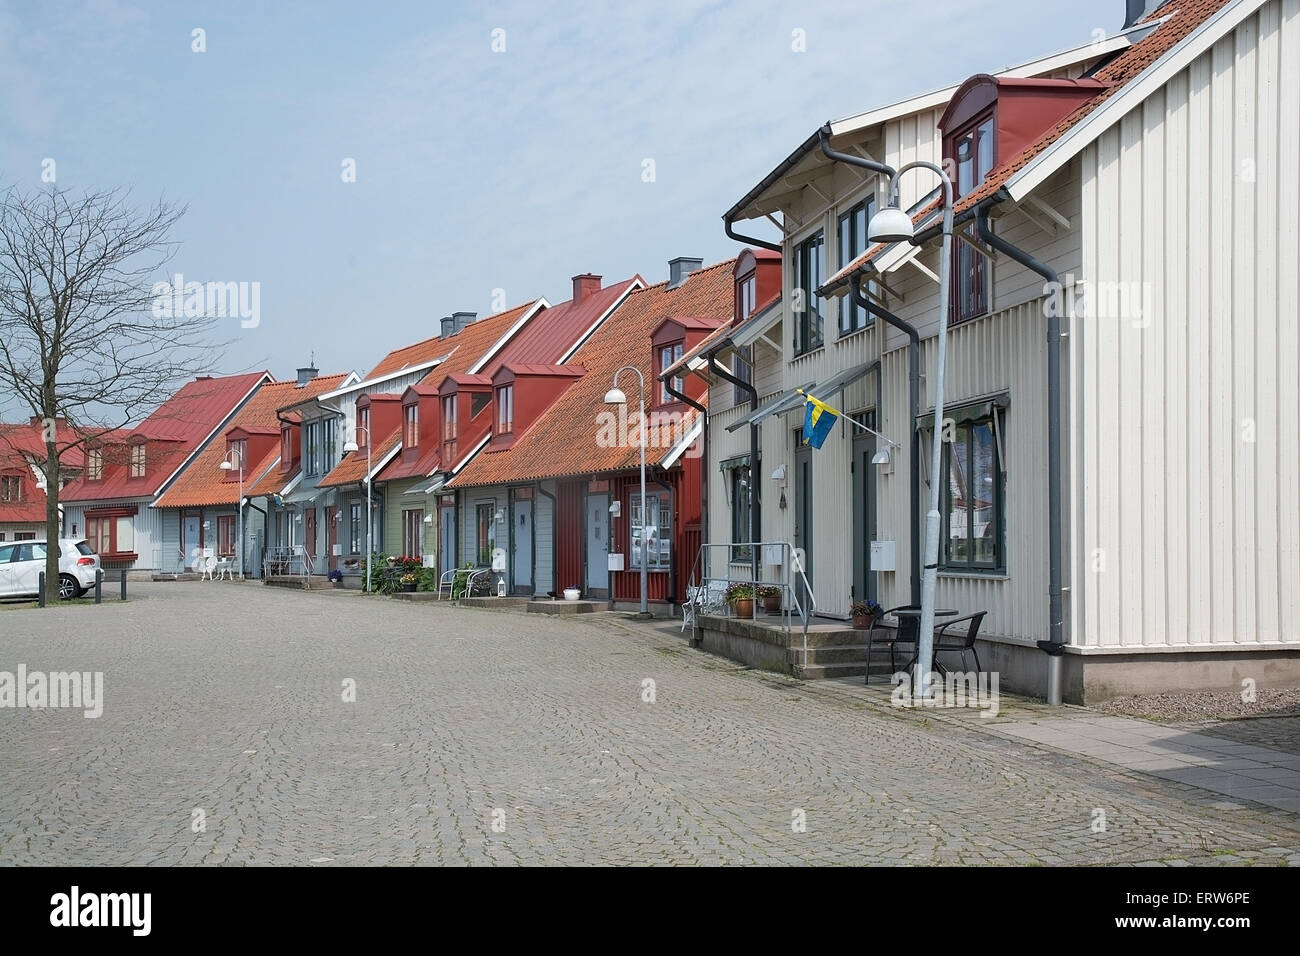 FALKENBERG, SWEDEN - JUNE 6, 2015: Picturesque colorful homes in Old Town on June 6 in Falkenberg, Sweden. Stock Photo